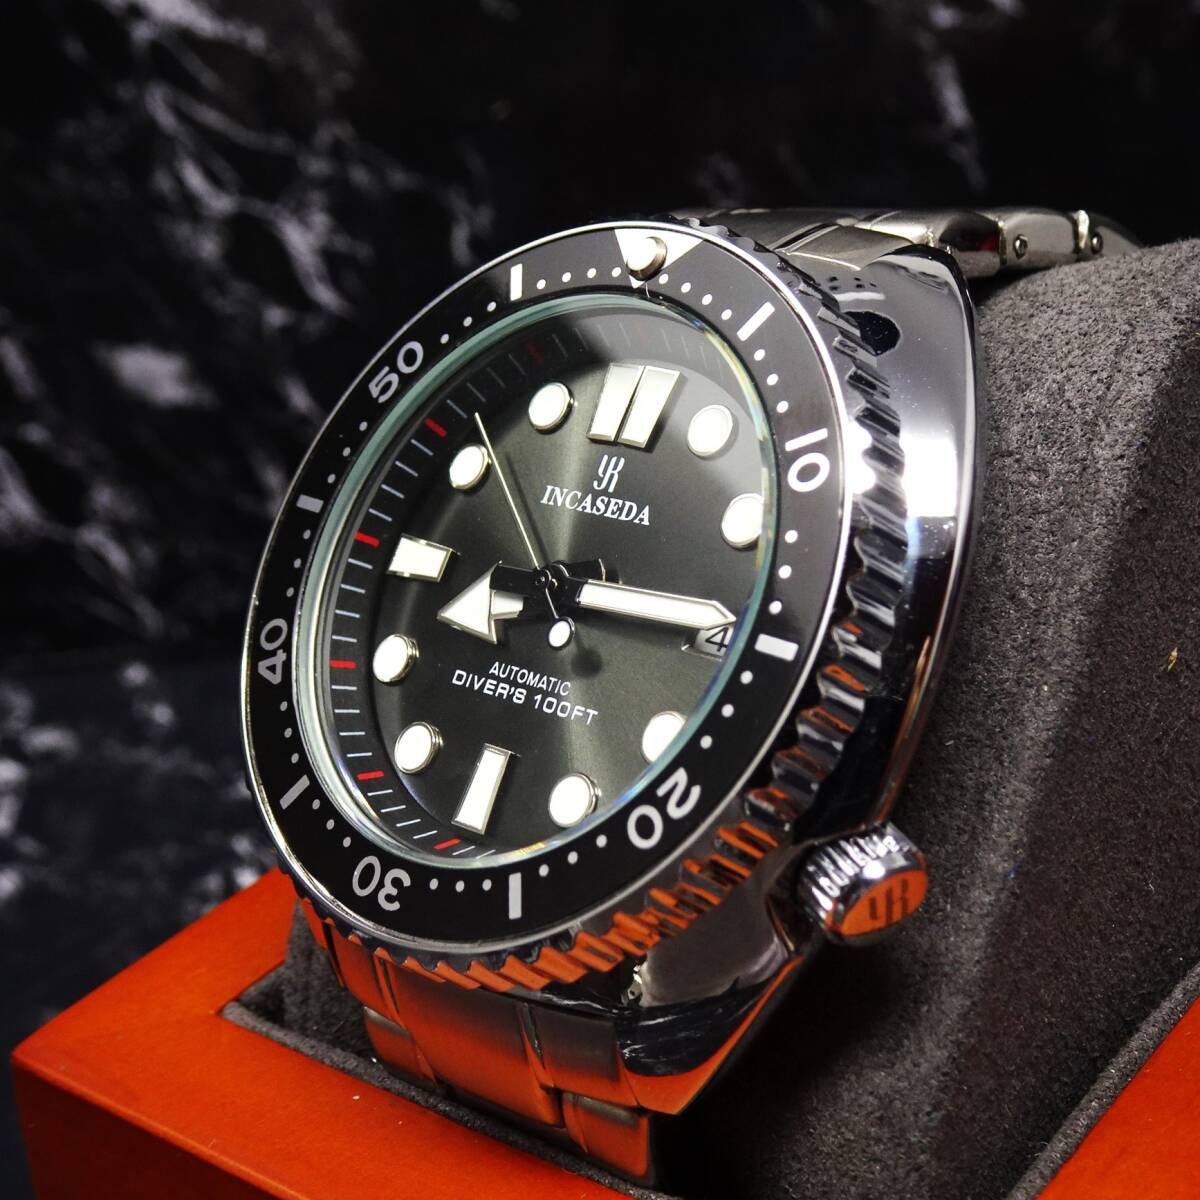  free shipping = new goods =INCASEDA brand = 3 hands calendar machine oma-ju watch wristwatch * black bezel * full metal model * abalone design 